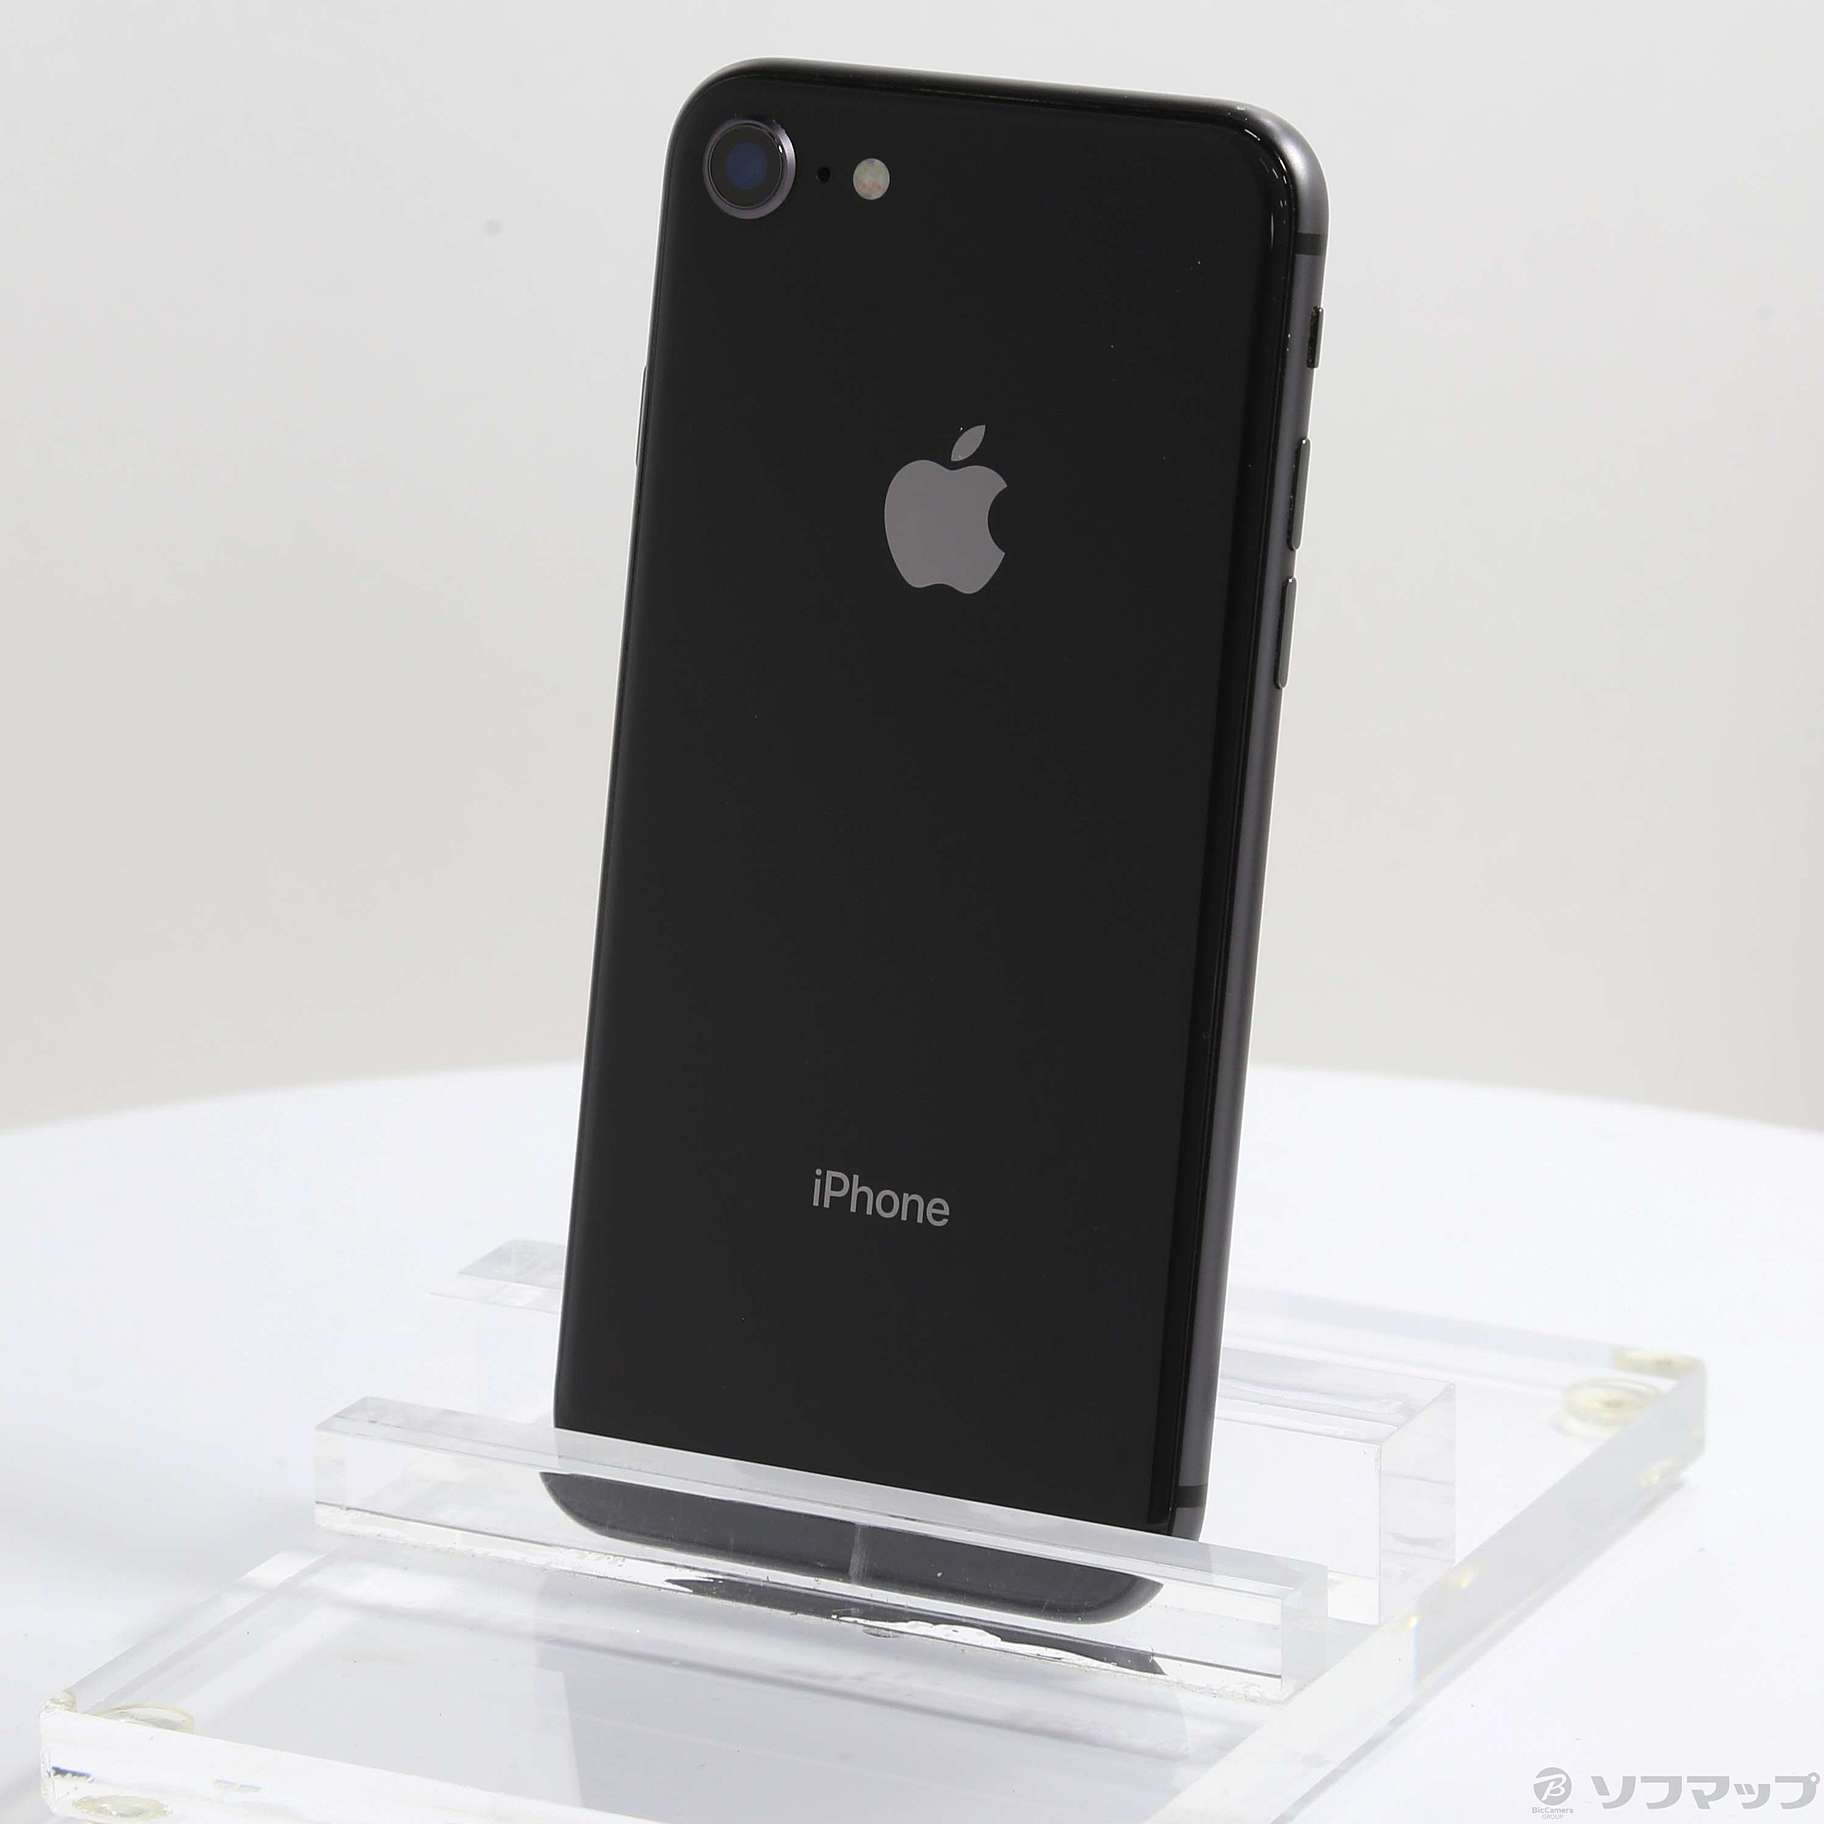 iPhone 8 Plus スペースグレー 64GB SIMフリー 新しい季節 